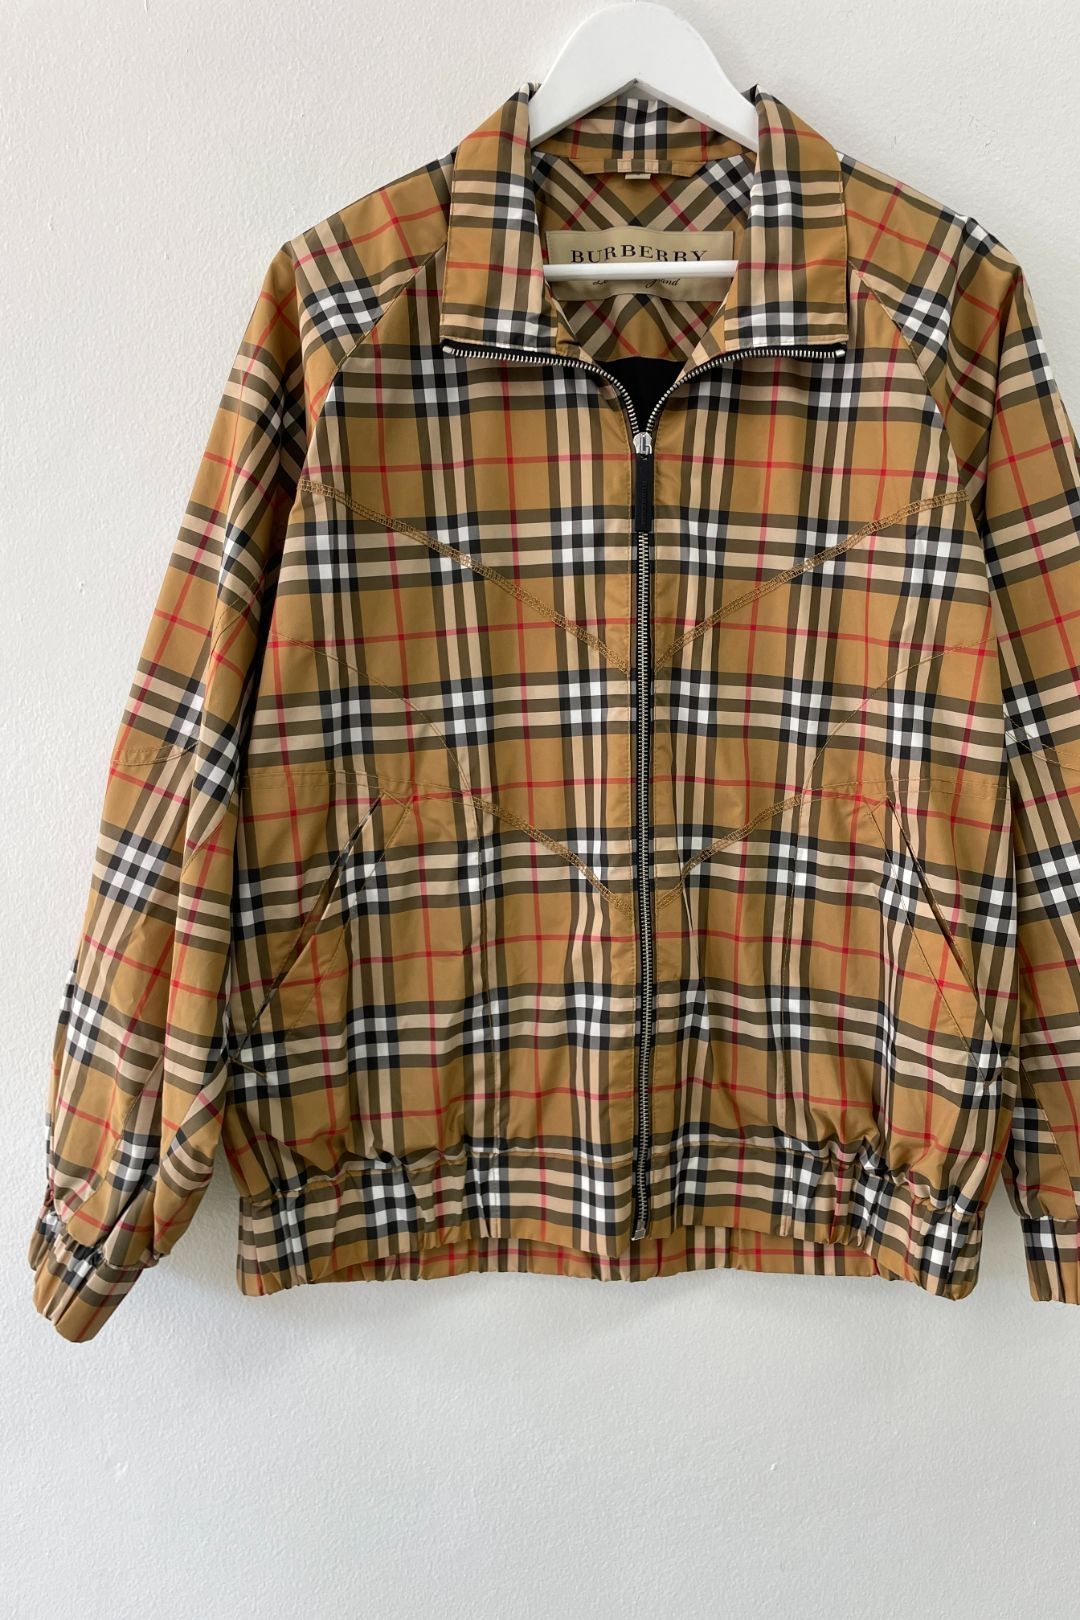 Burberry - Topstitch Detail Vintage Check Harrington Jacket